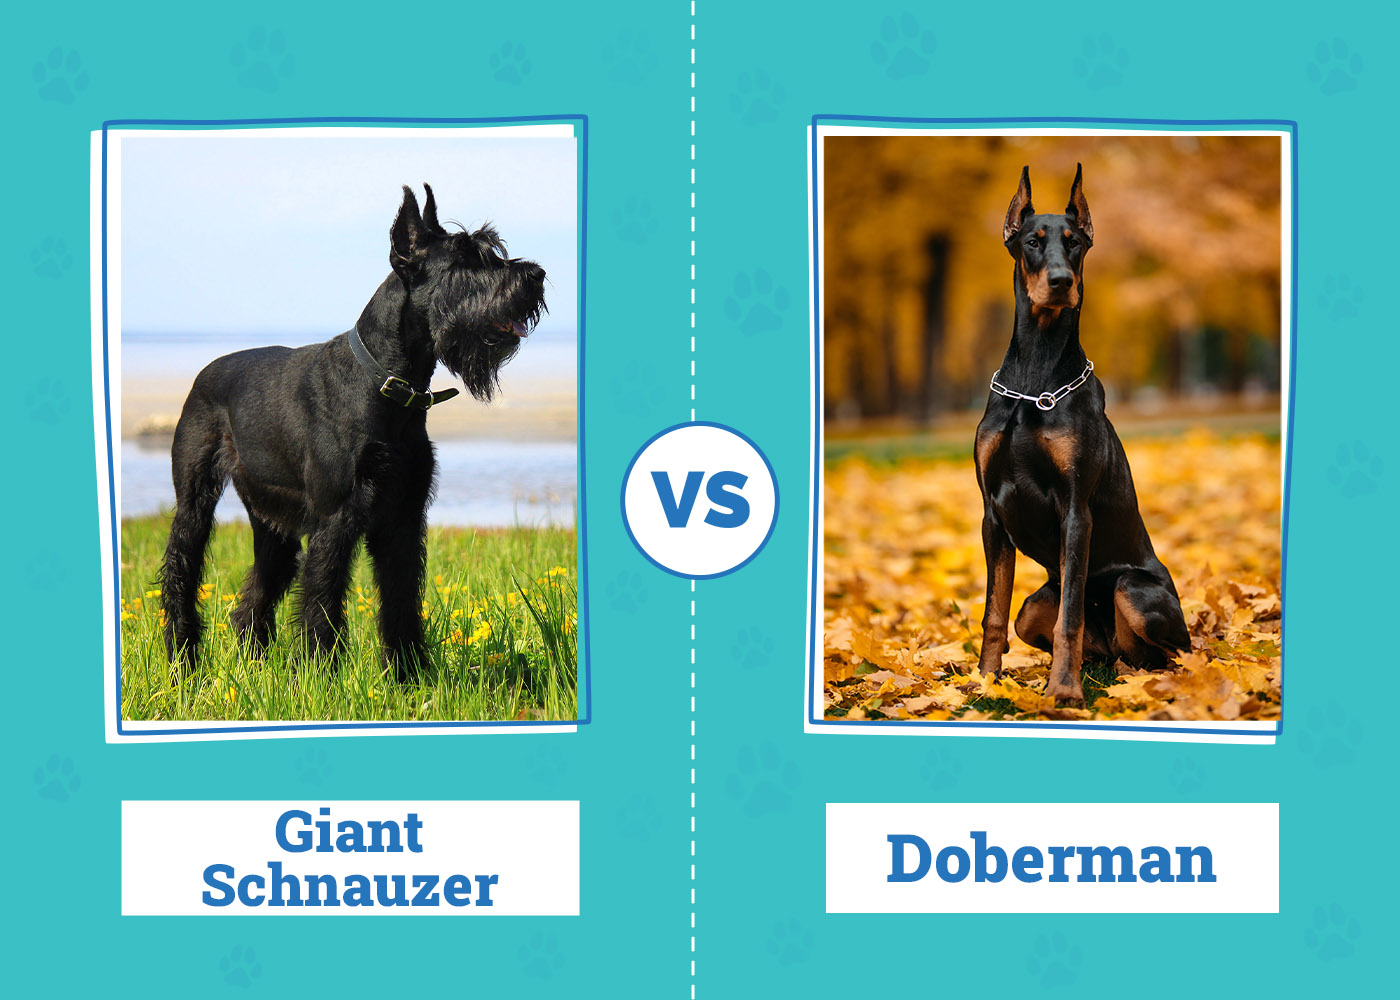 Giant Schnauzer vs Doberman